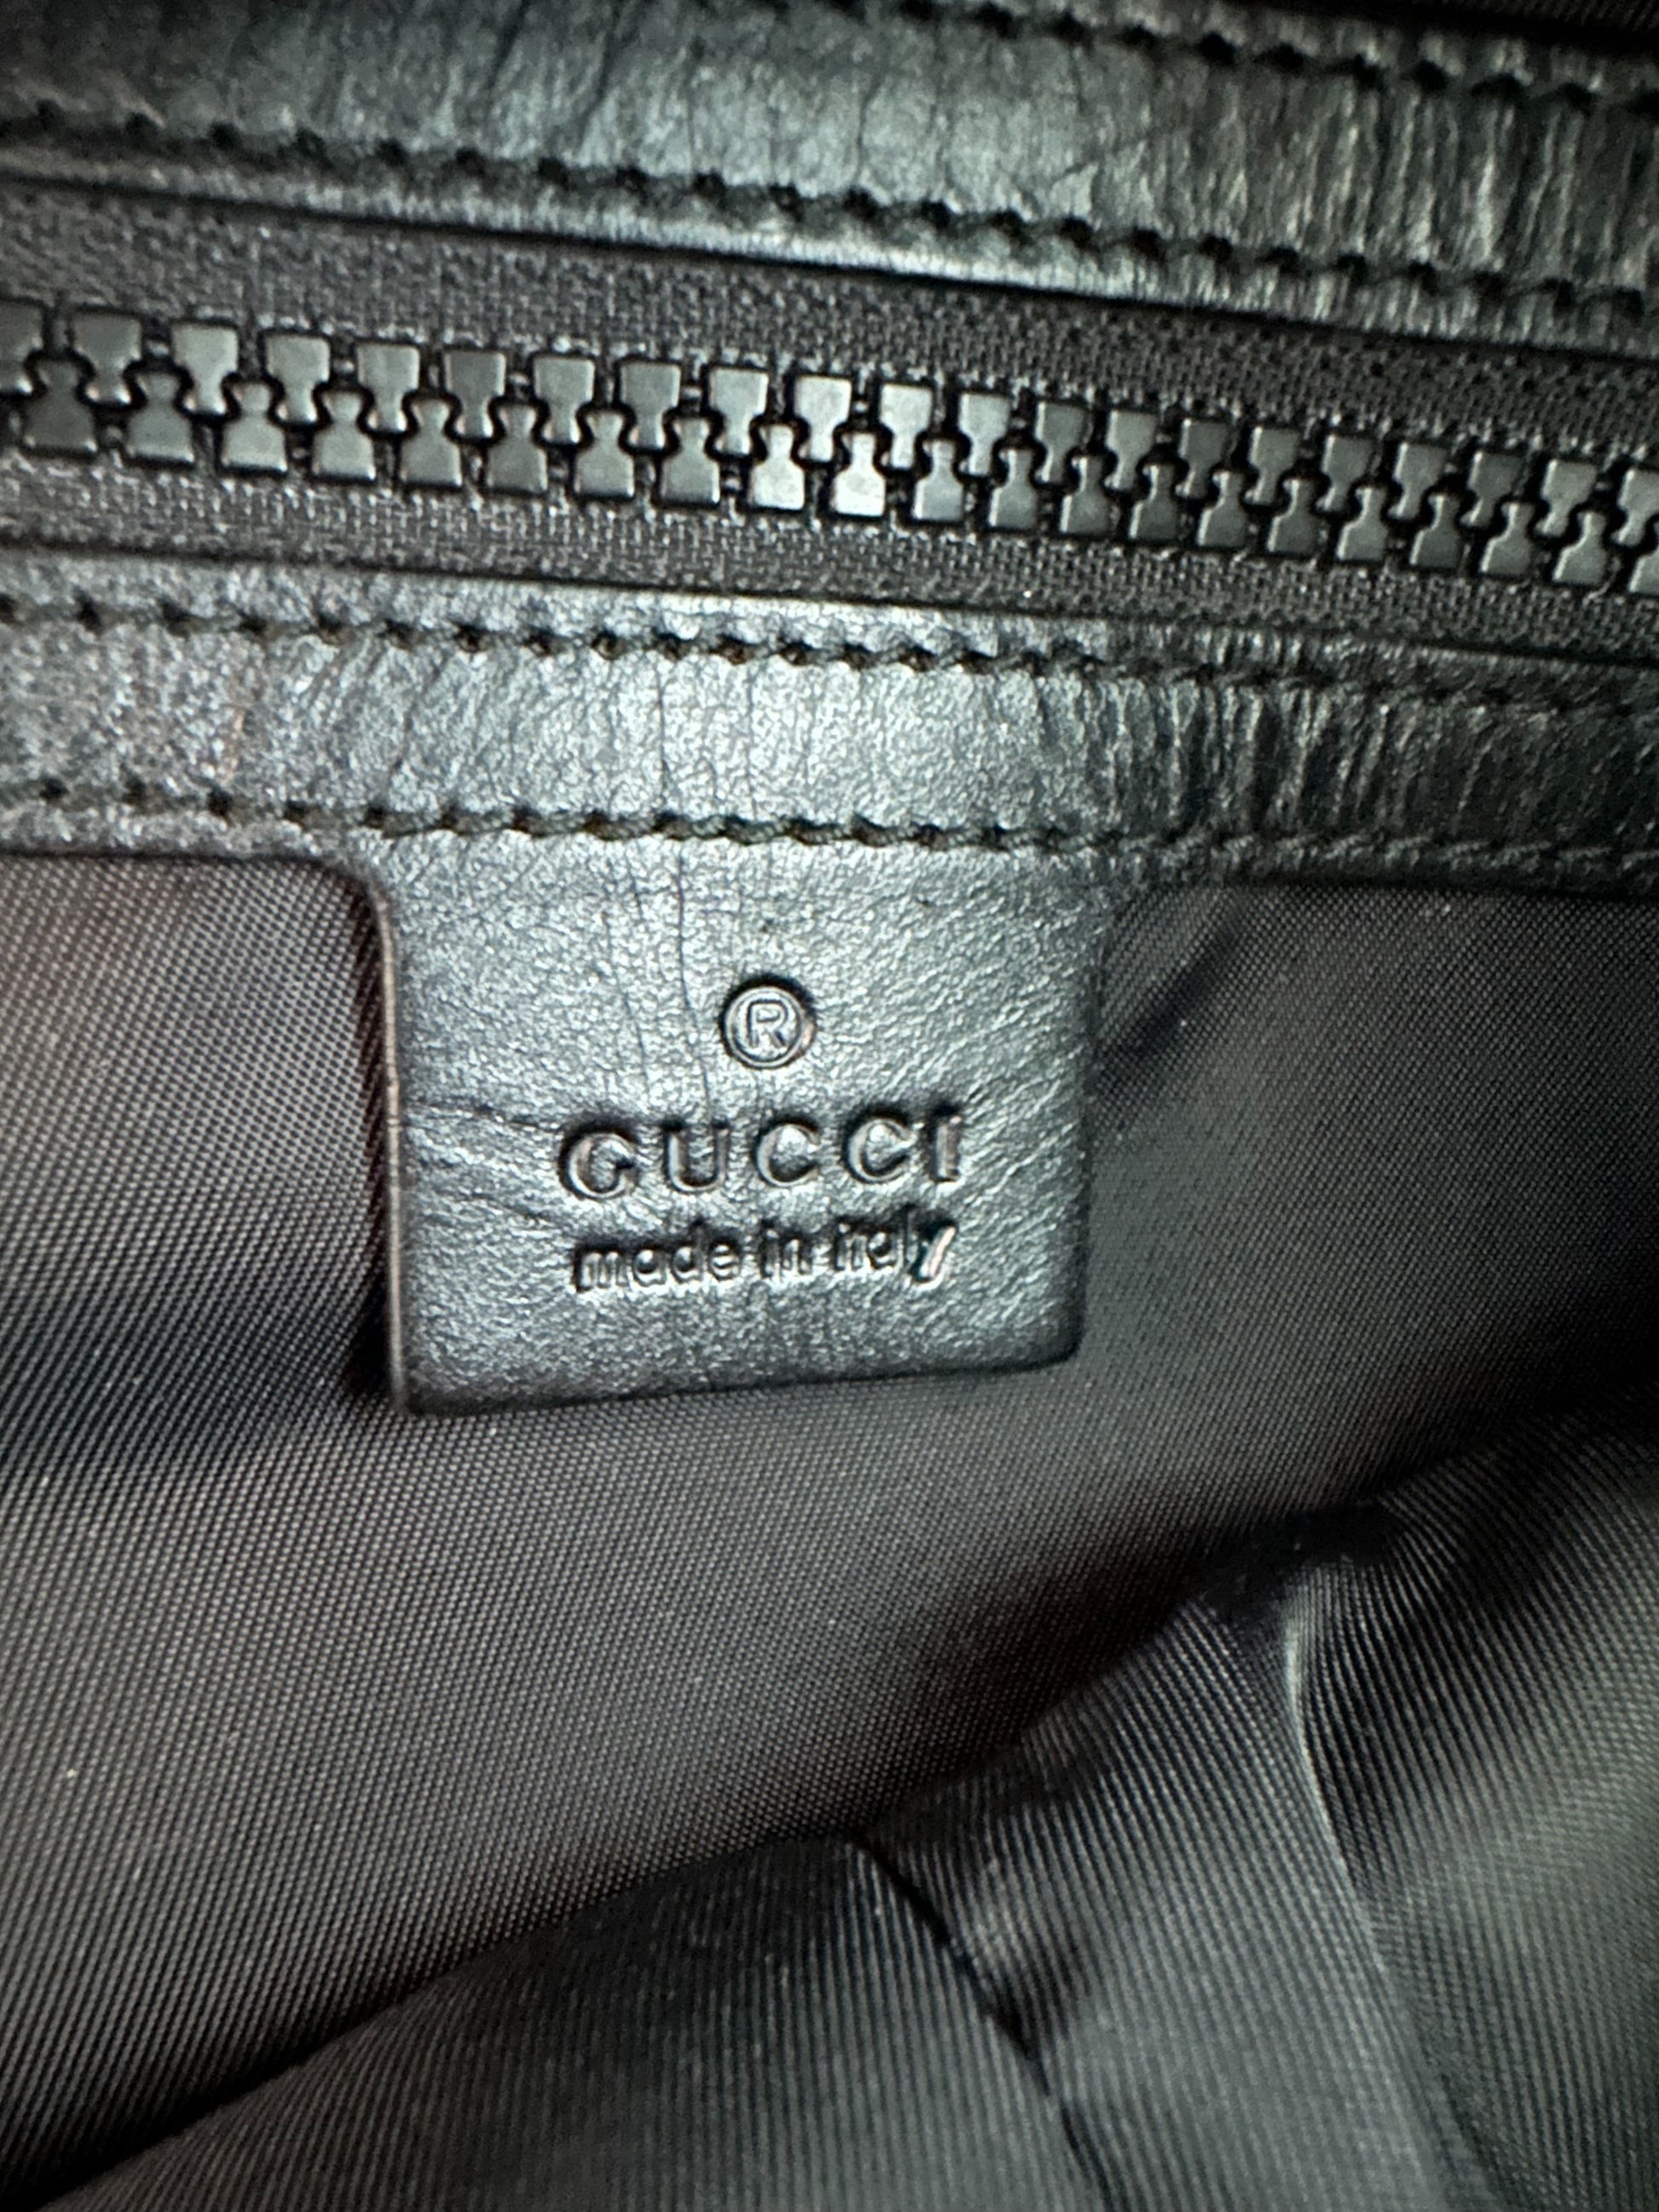 Gucci Soft Backpack Monogram GG Black/Brown